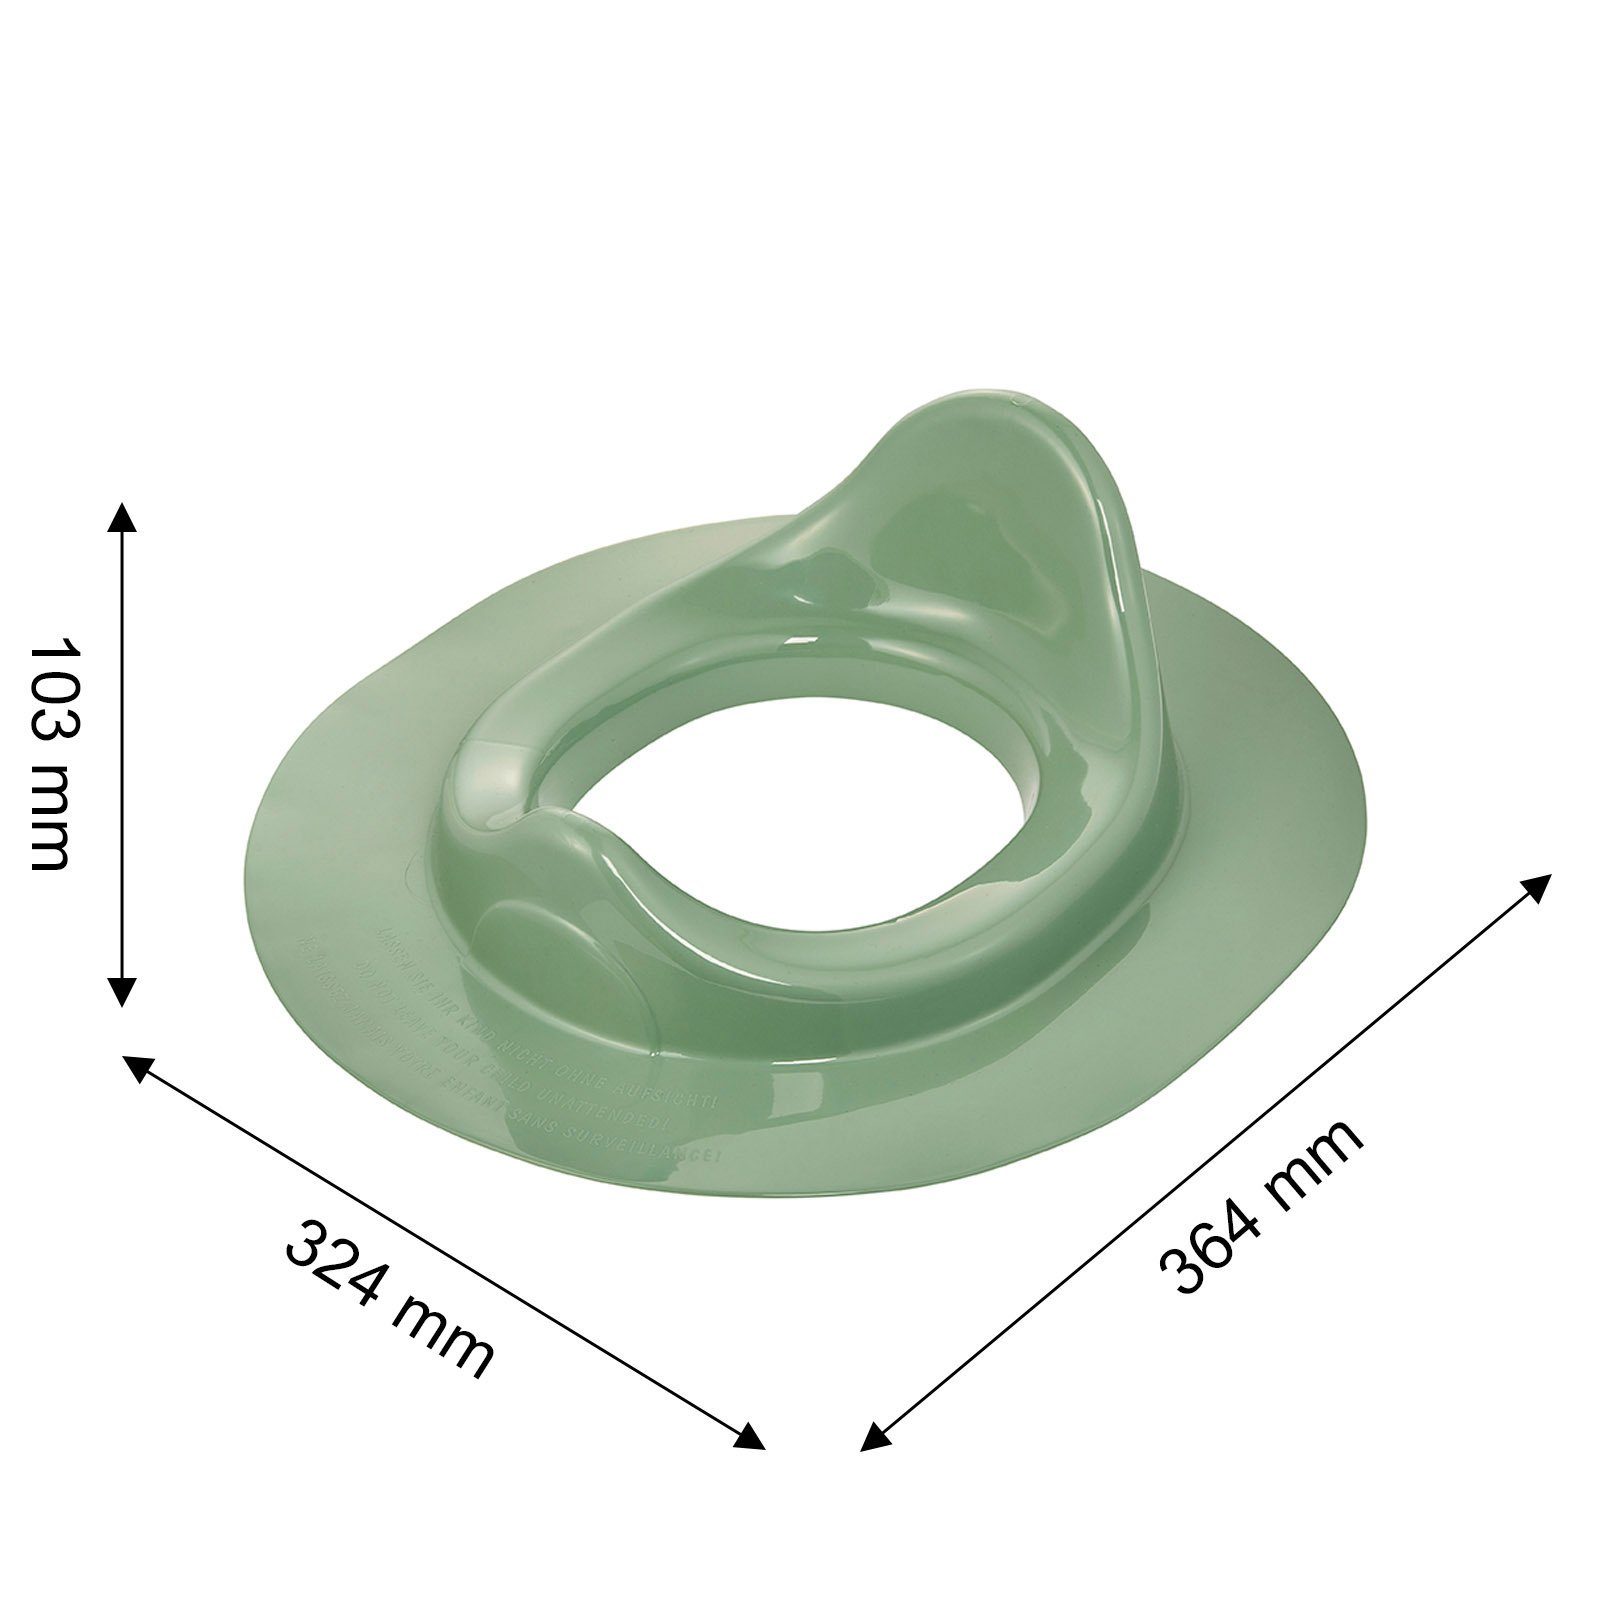 Rotho Toilettentrainer shale Babydesign green